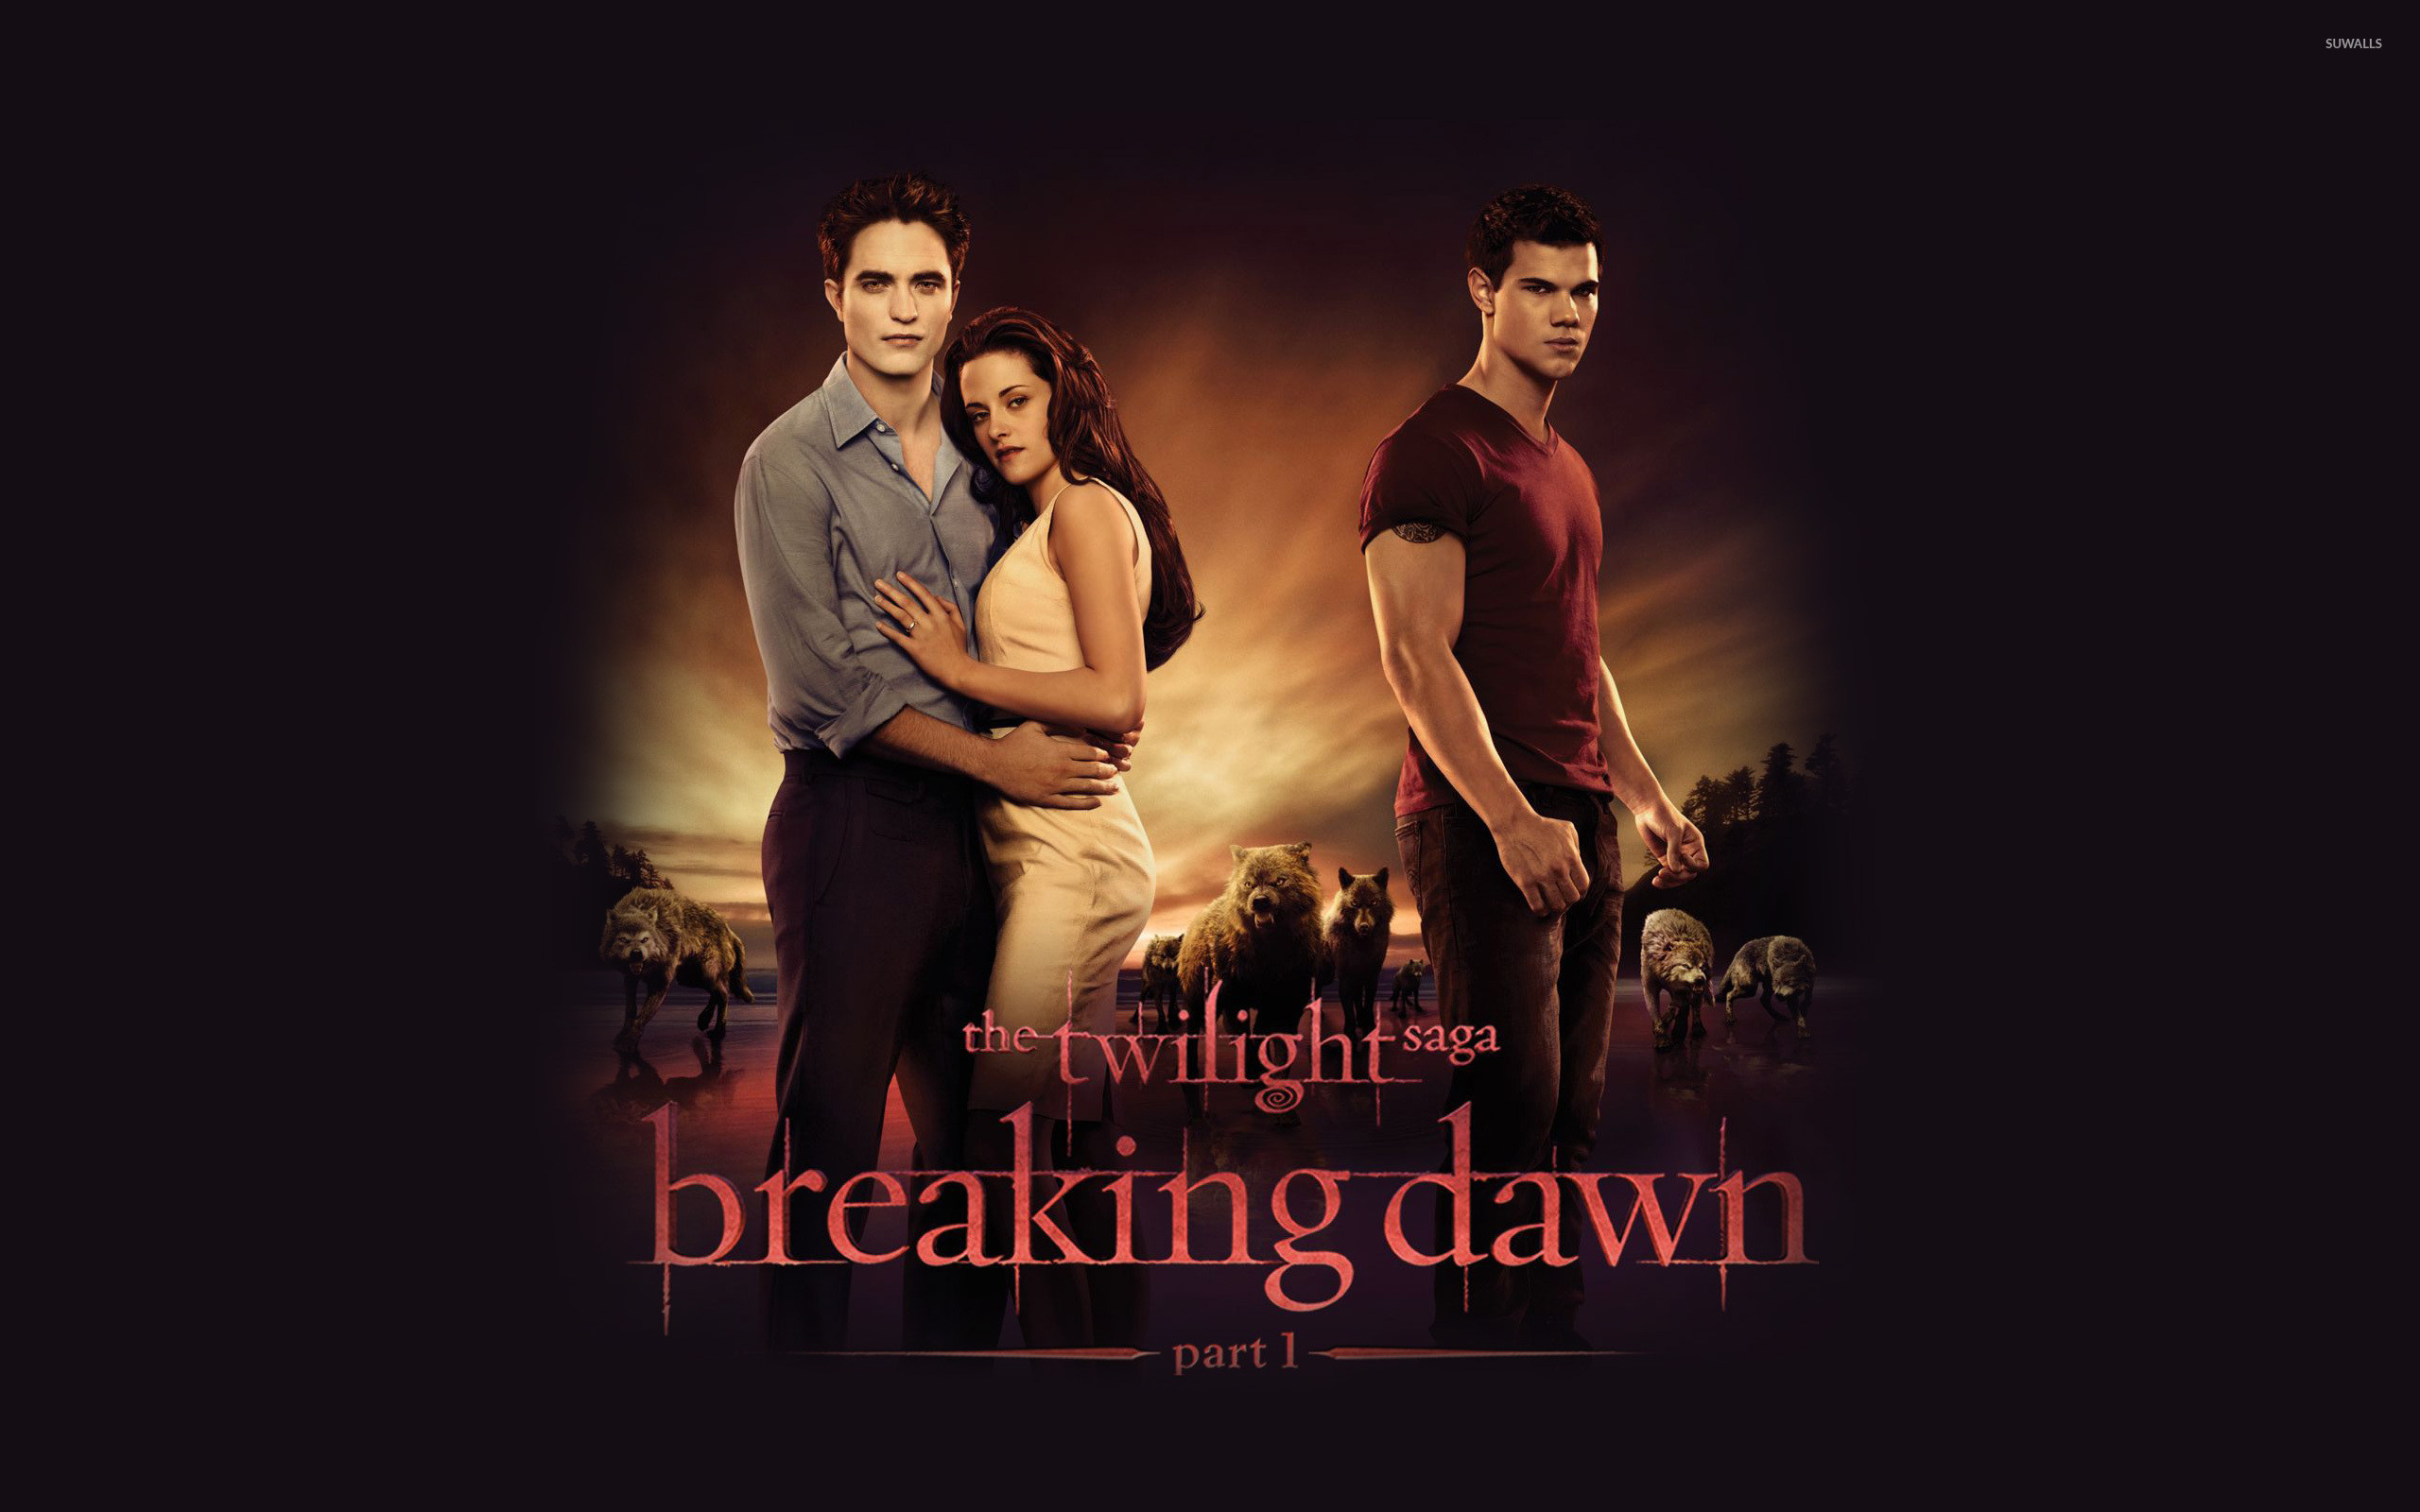 Taylor Lautner 5k The Twilight Saga Breaking Dawn Part 1 Wallpaper 2560x1600 Jpg 2560x1600